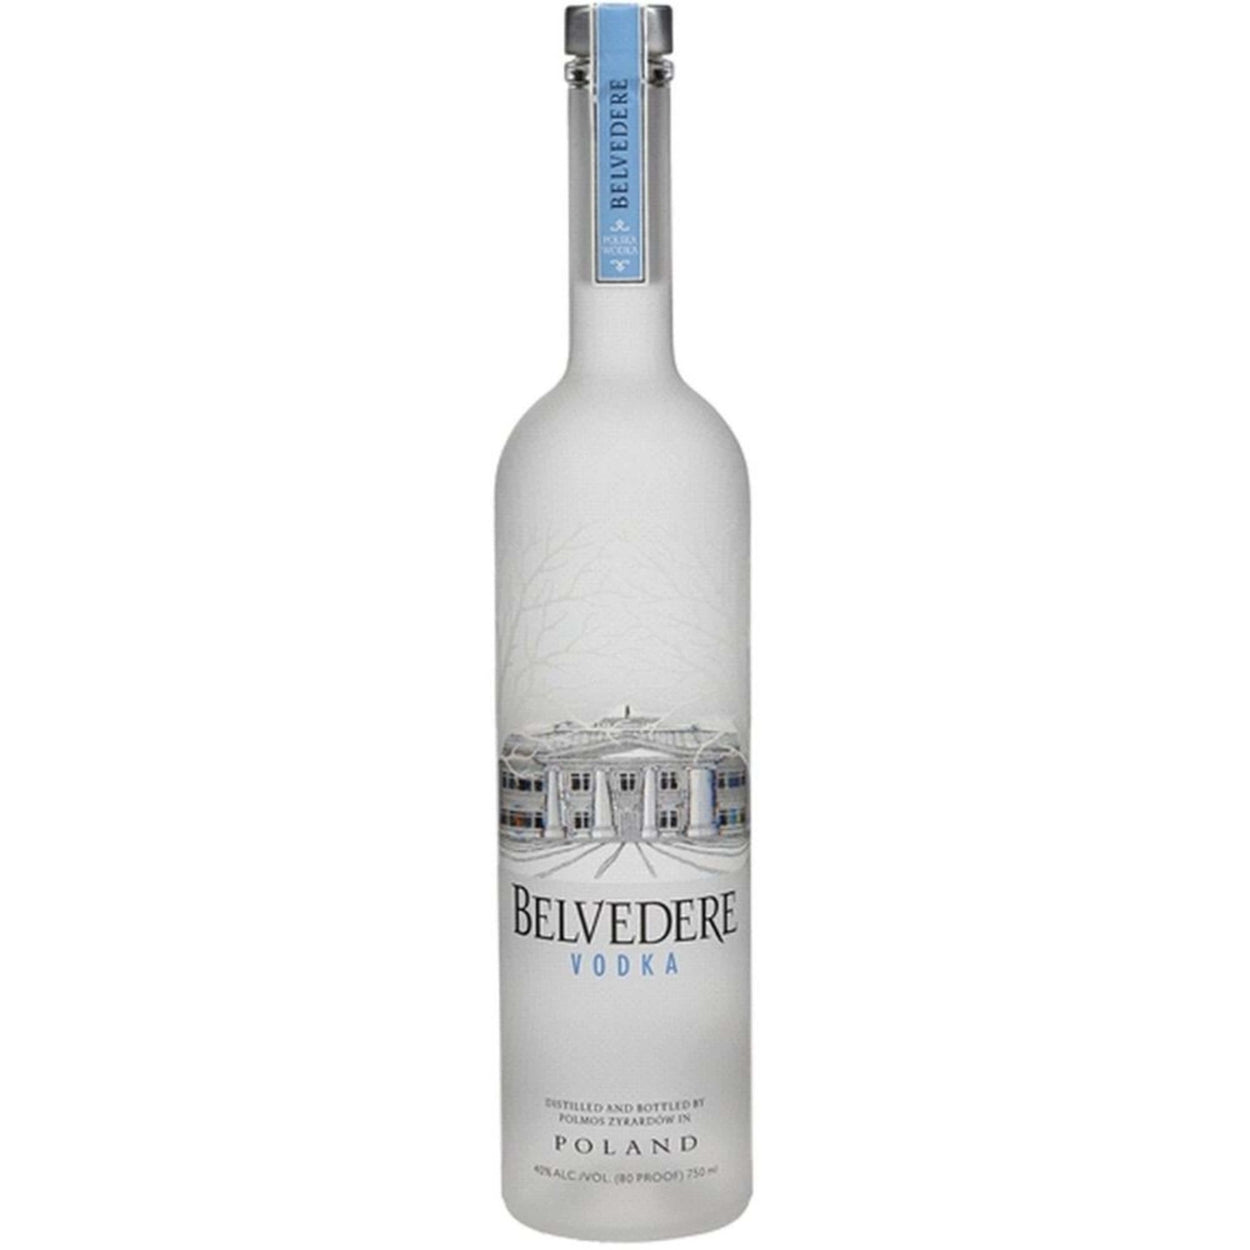 A Bottle of Belvedere Vodka Editorial Stock Photo - Image of drink,  beverage: 184658773